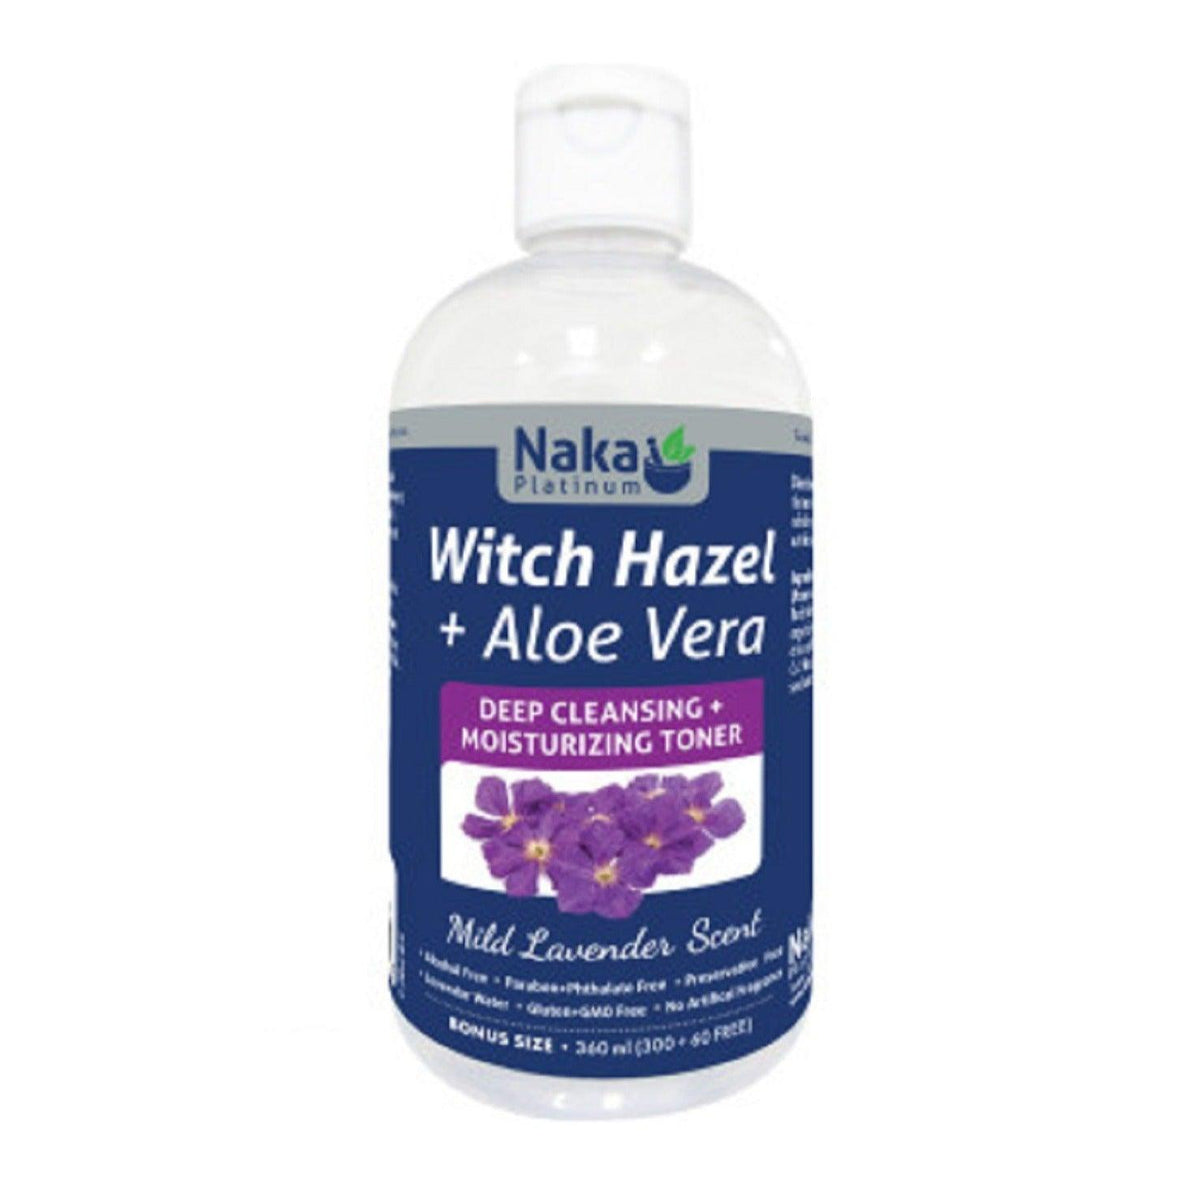 Naka Witch Hazel + Aloe Cleansing Toner 360ml Face Toner at Village Vitamin Store